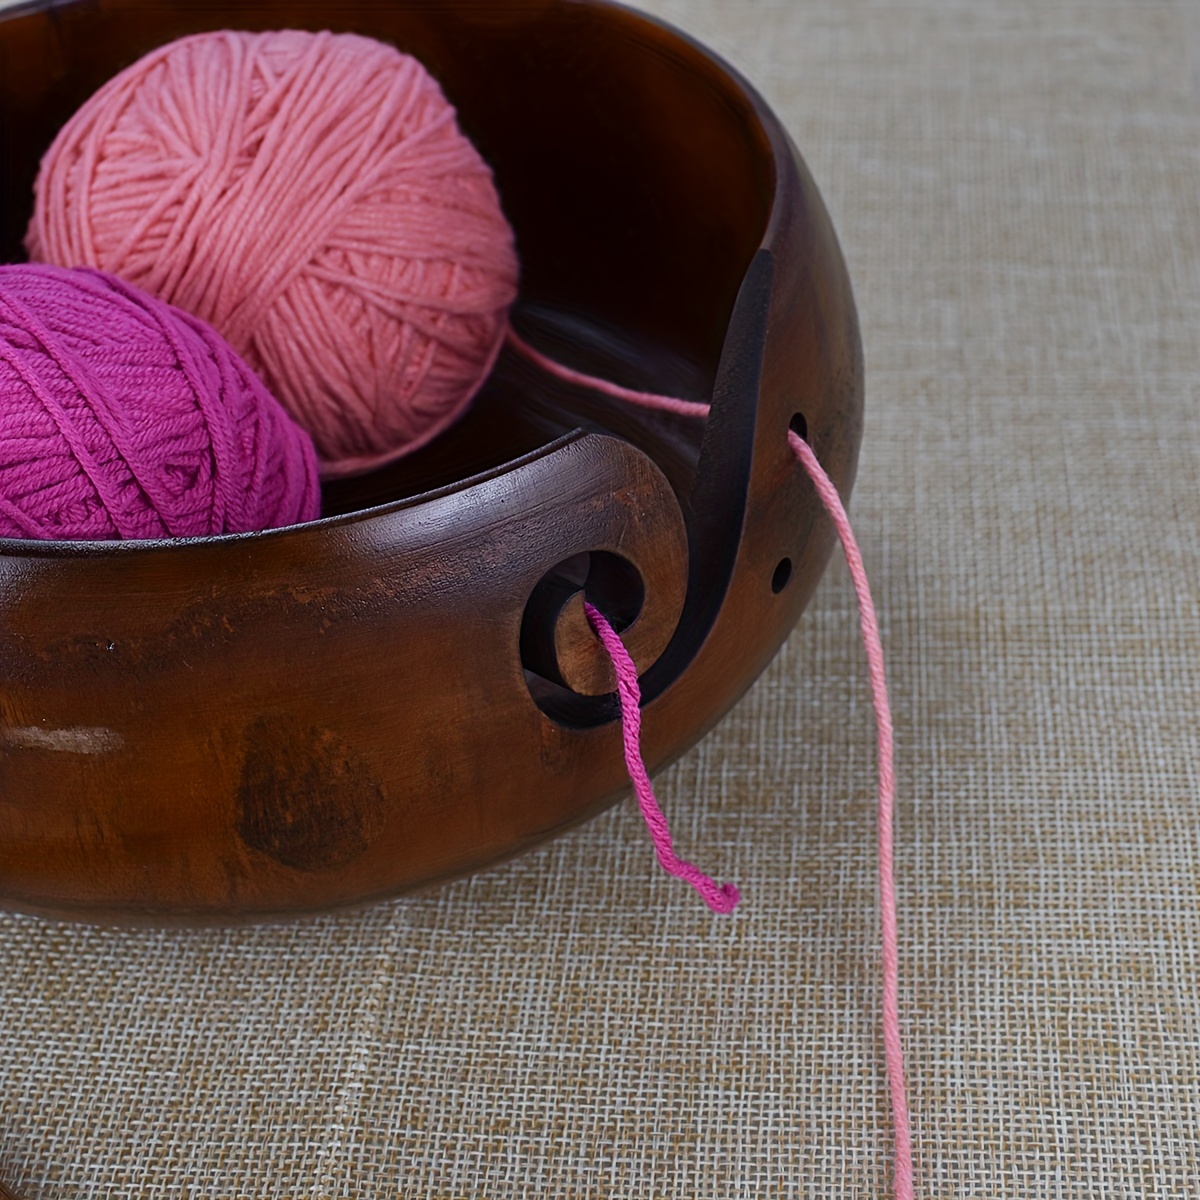 WILLBOND Wooden Yarn Bowl, 6 x 3 Inches Knitting Yarn Bowls with Holes Crochet Bowl Holder Handmade Yarn Storage Bowl for DIY Knitting Crocheting